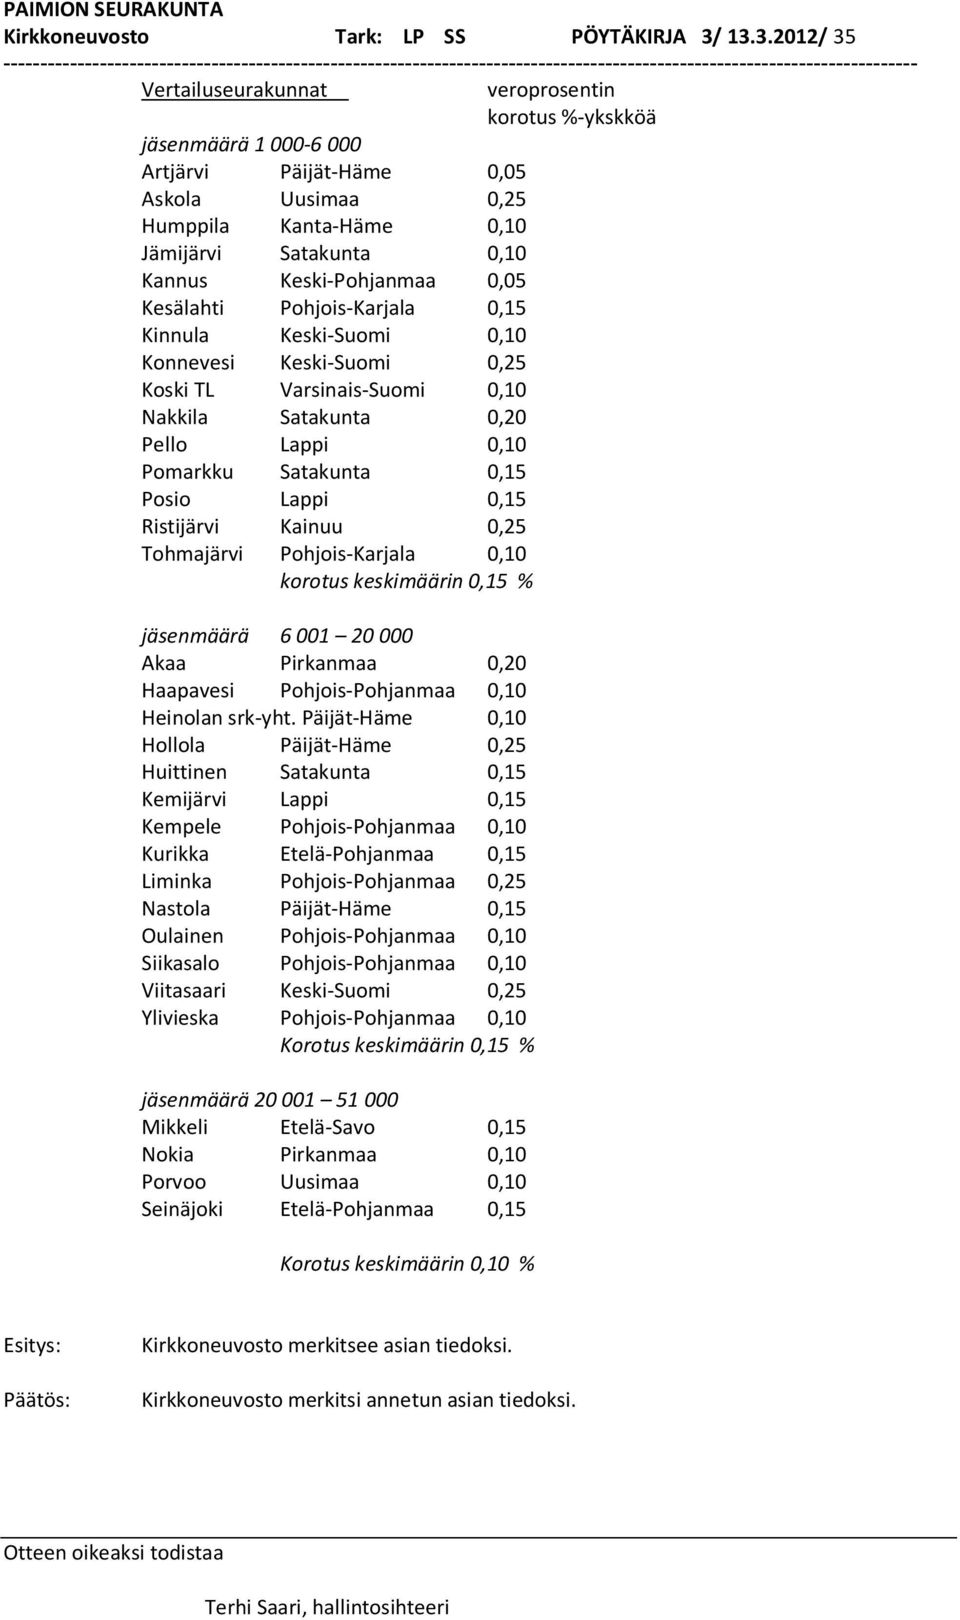 Pohjois-Karjala 0,15 Kinnula Keski-Suomi 0,10 Konnevesi Keski-Suomi 0,25 Koski TL Varsinais-Suomi 0,10 Nakkila Satakunta 0,20 Pello Lappi 0,10 Pomarkku Satakunta 0,15 Posio Lappi 0,15 Ristijärvi